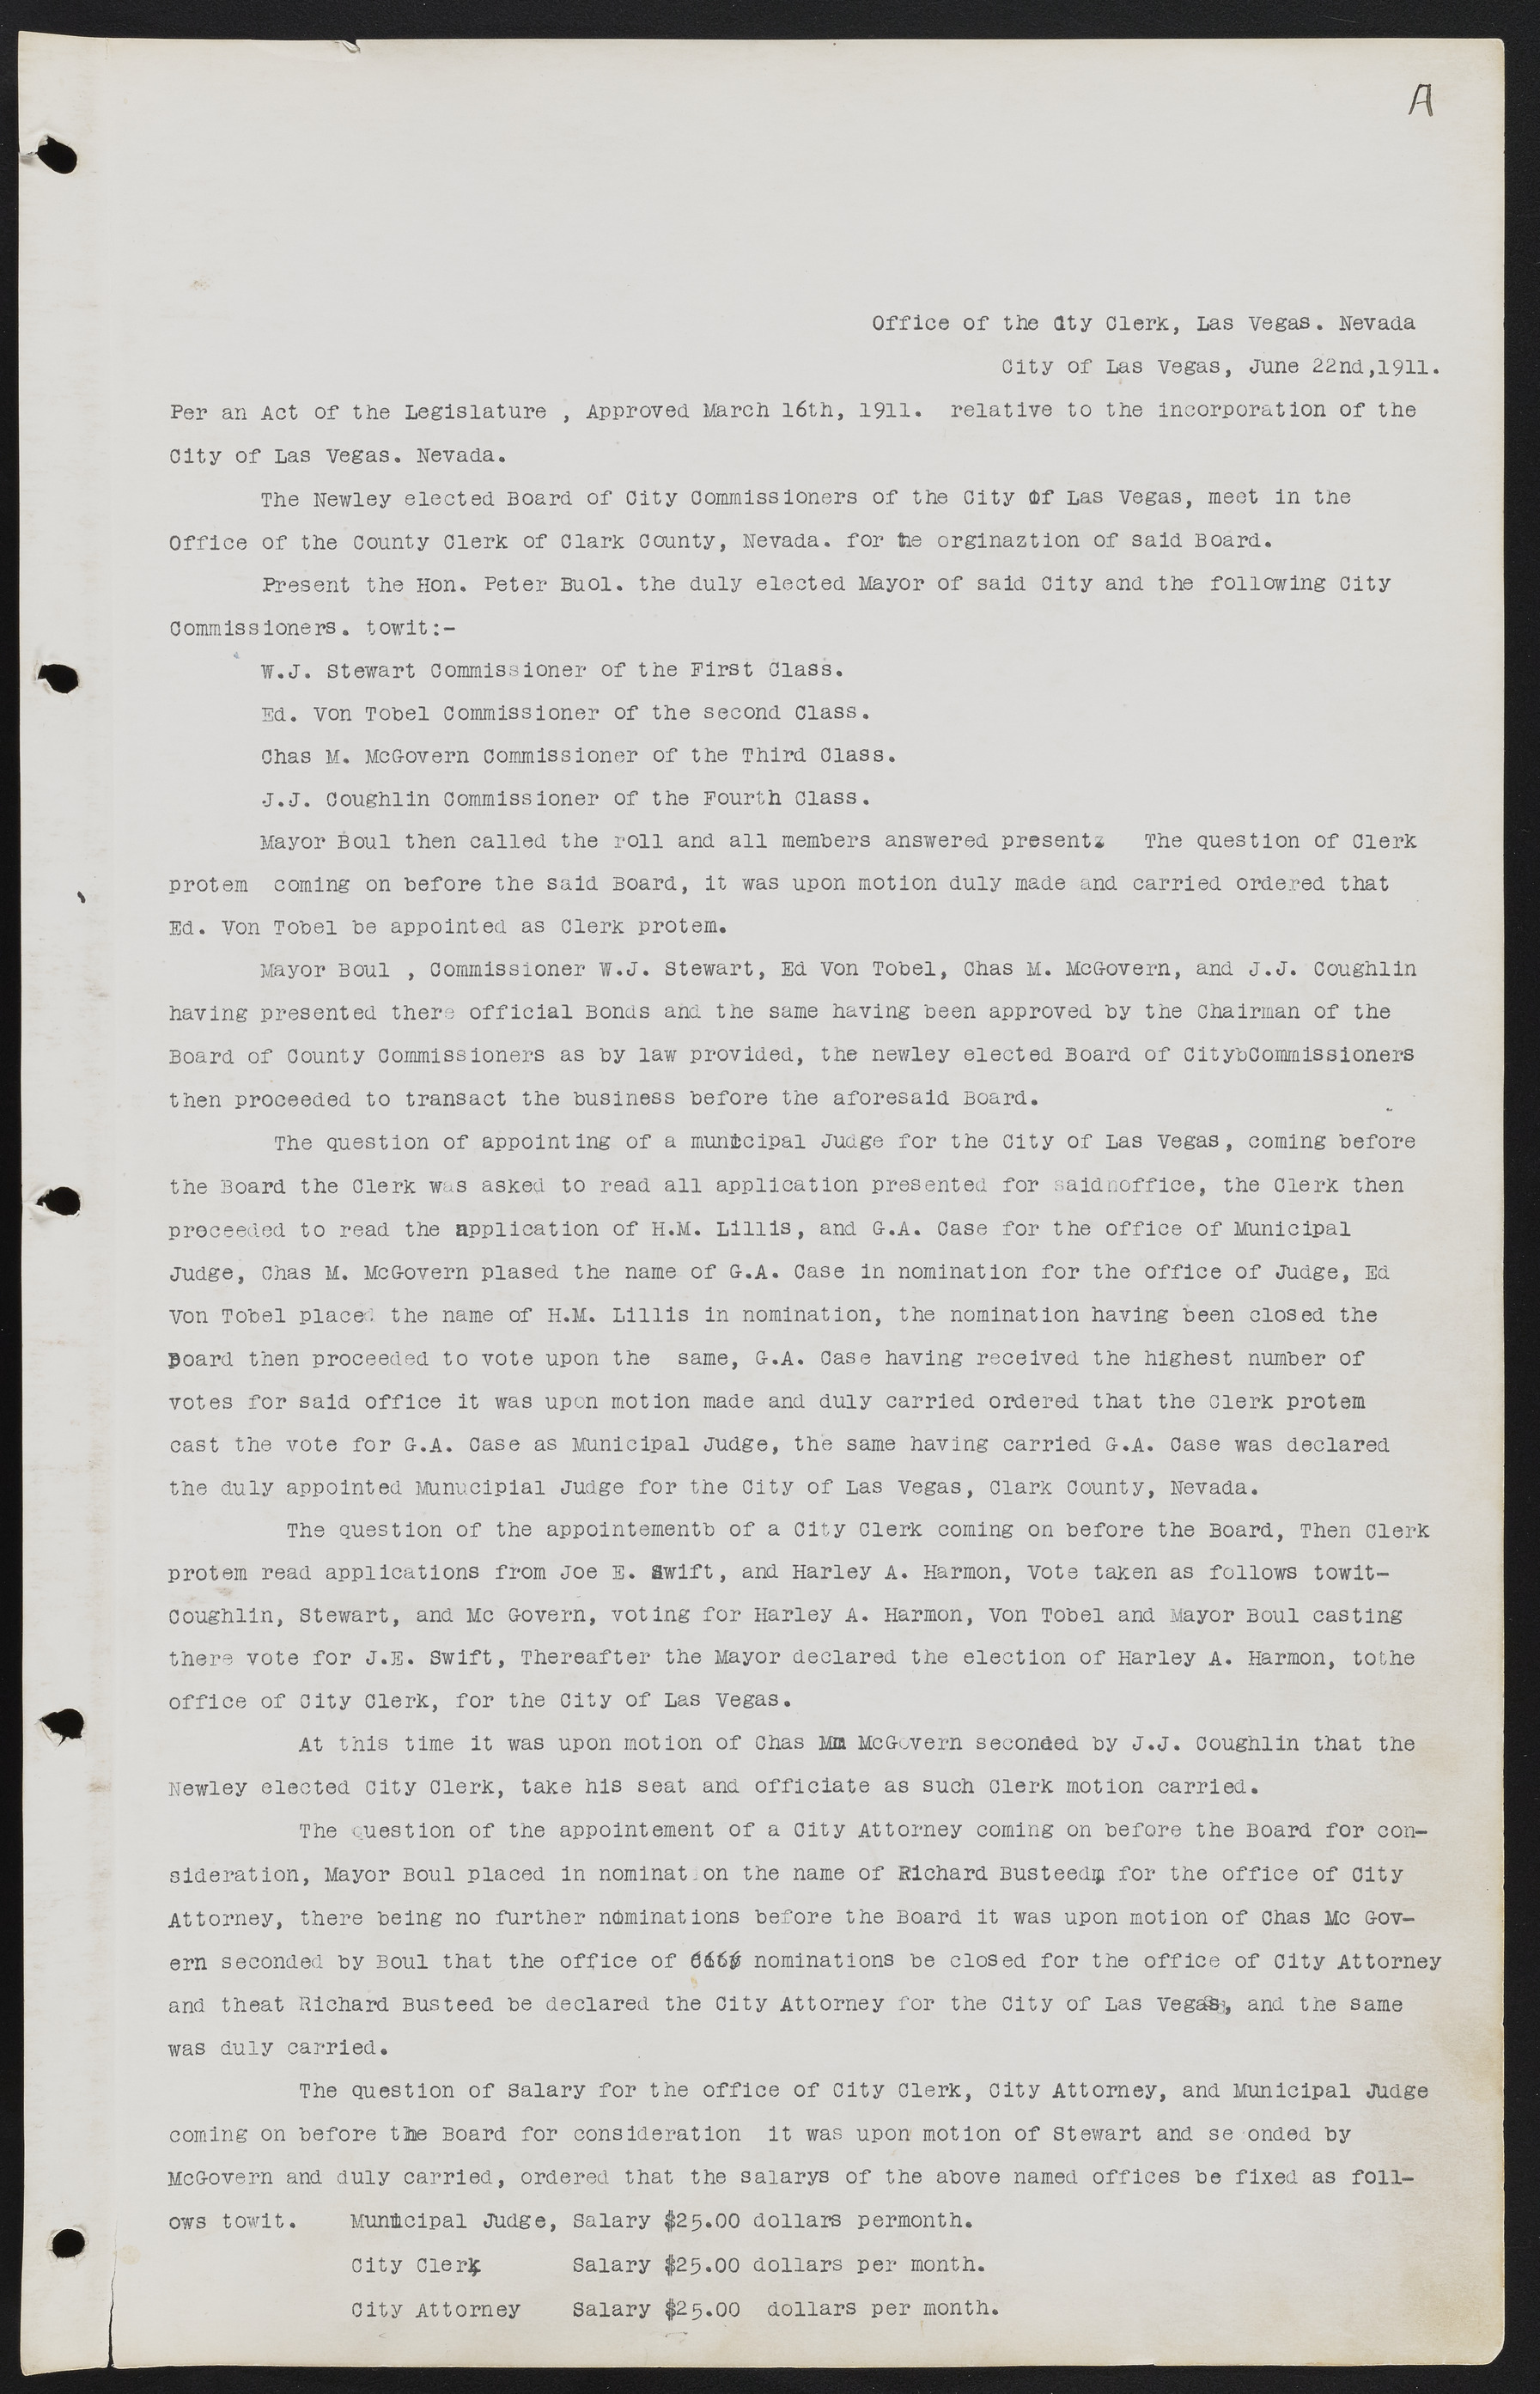 Las Vegas City Commission Minutes, June 22, 1911 to February 7, 1922, lvc000001-3